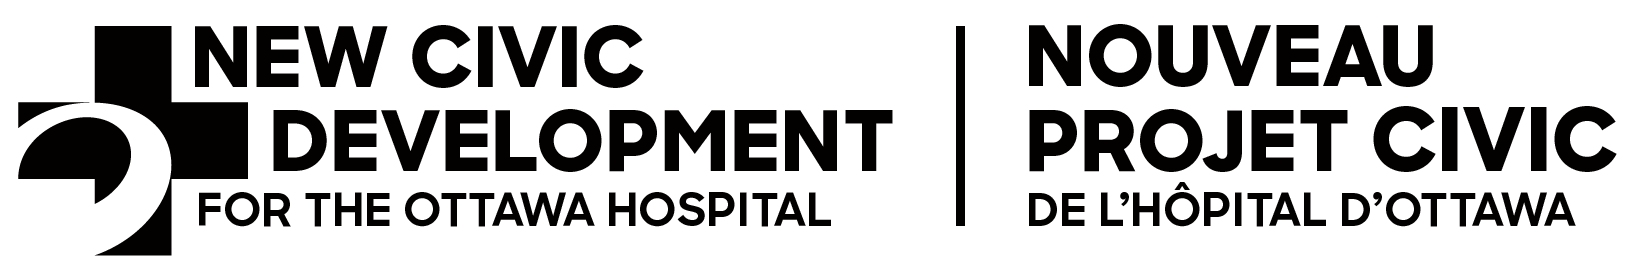 Logo Noir et Blanc de L’Hôpital d’Ottawa